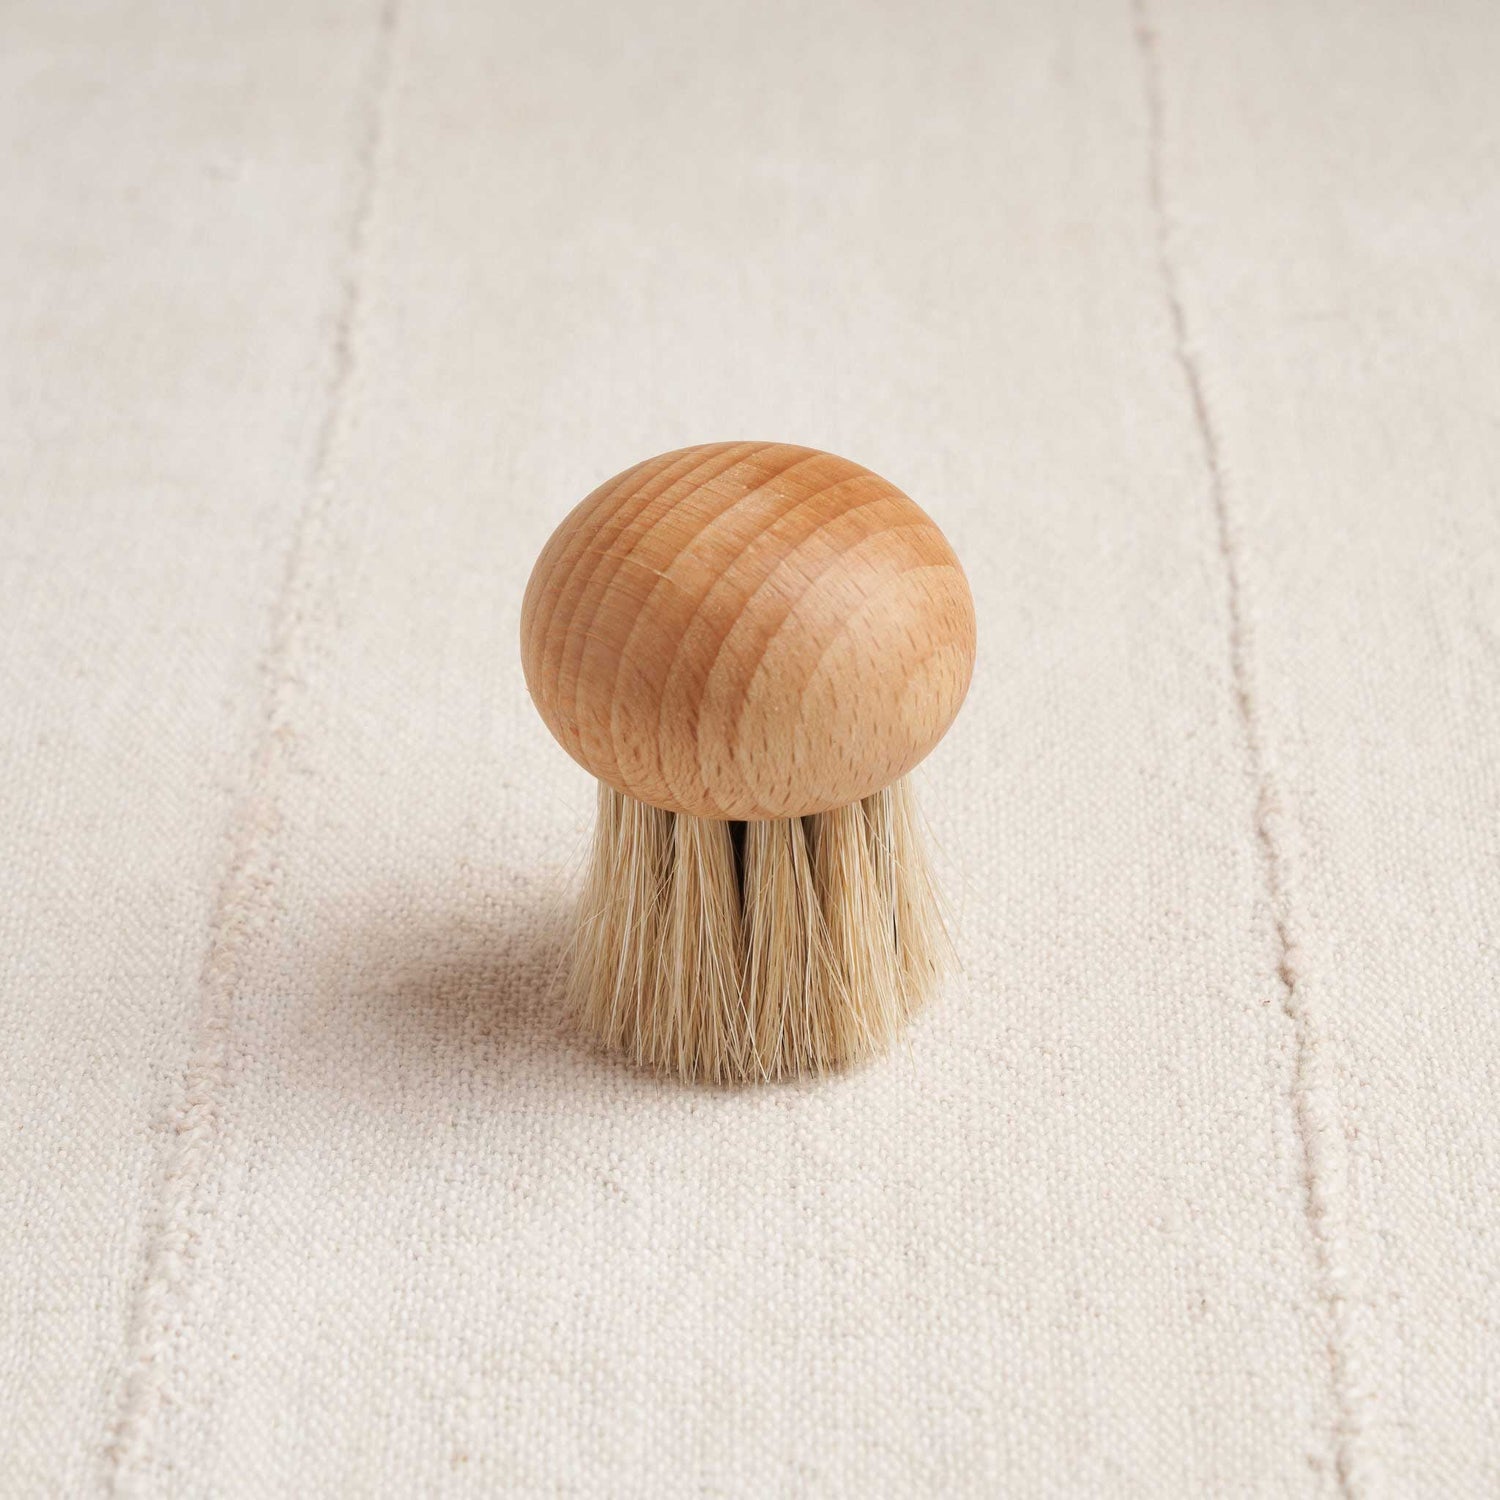 Bürstenhaus Redecker Mushroom Brush